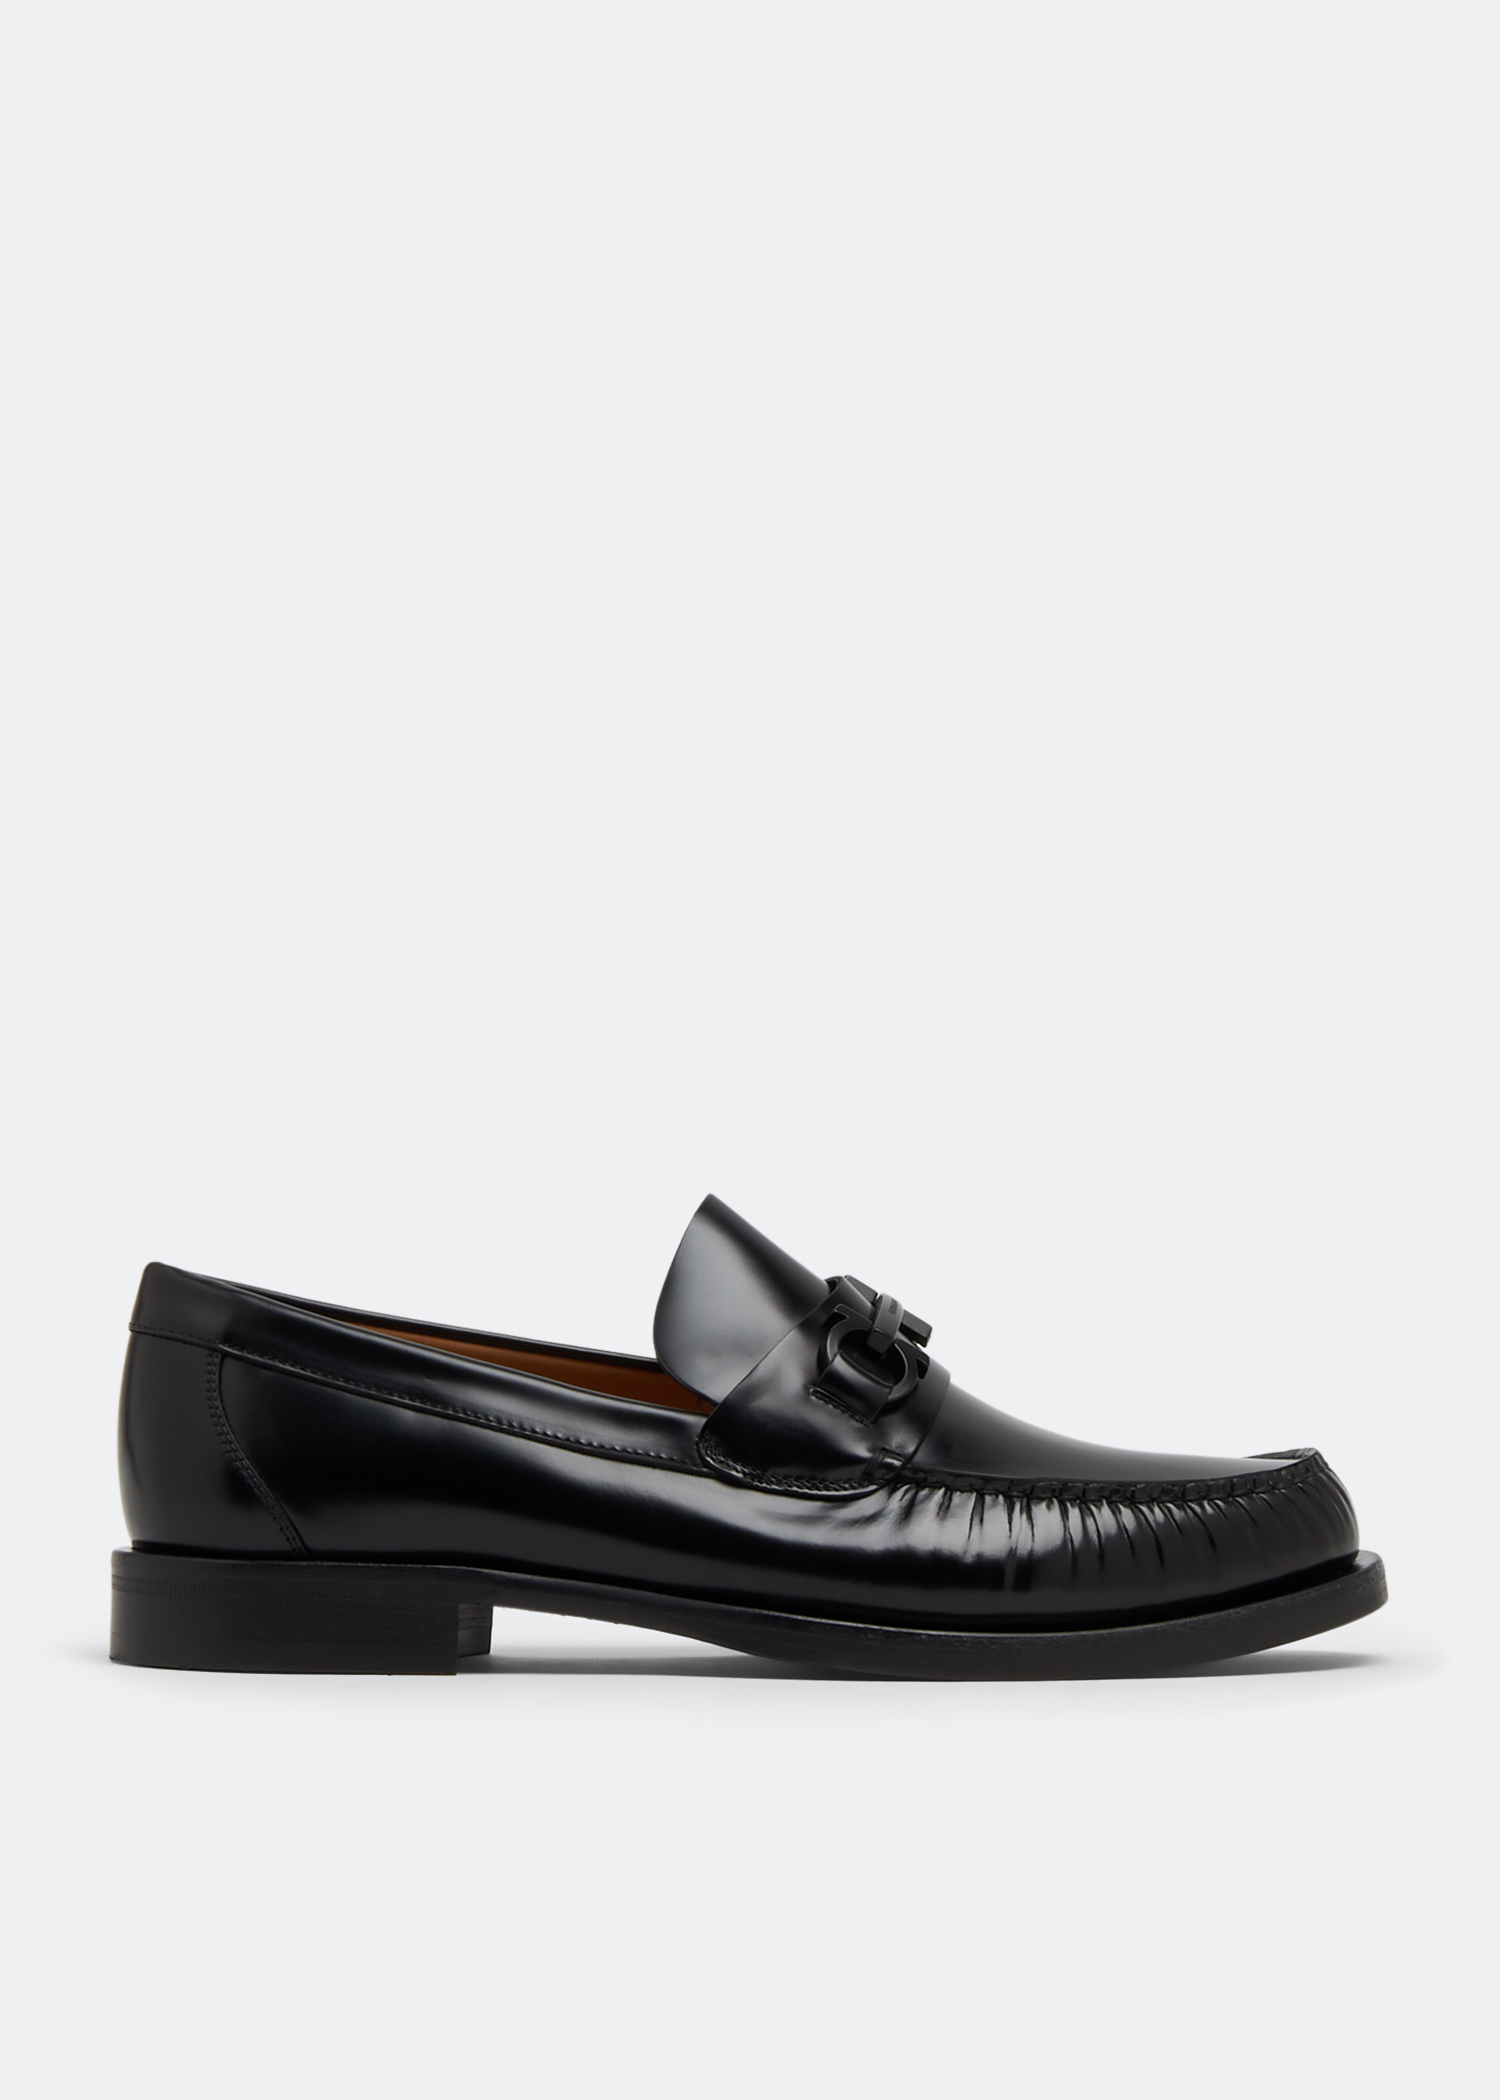 Ferragamo Loafer for men at Rs 1375/pair